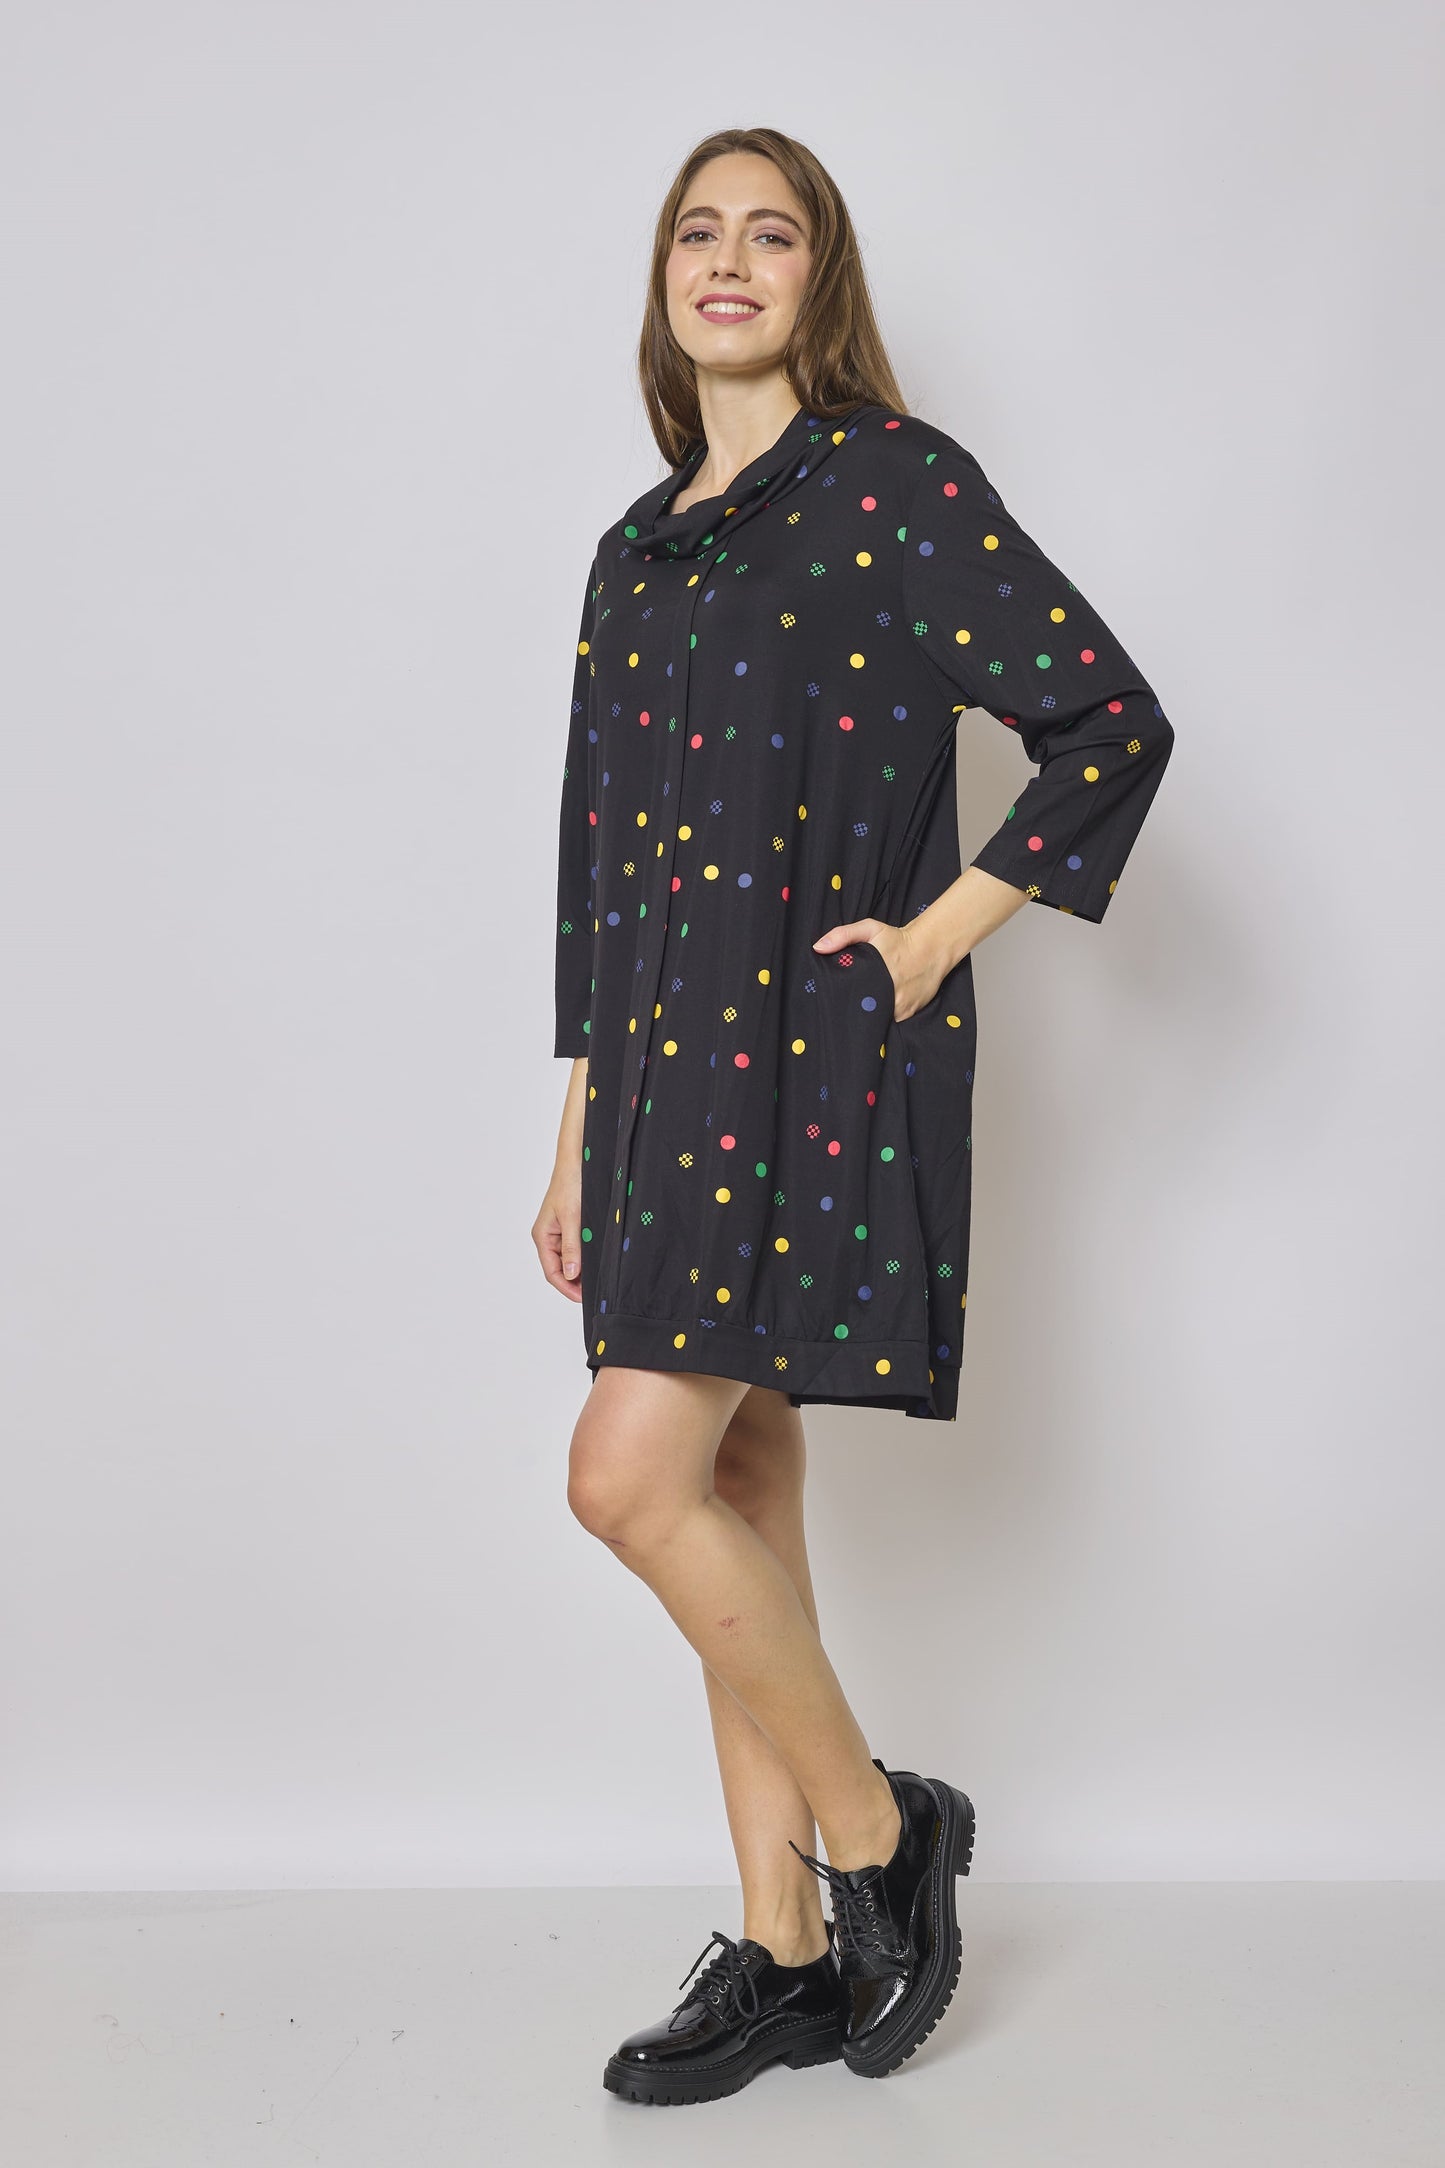 Colorful polka dot turtleneck tunic dress